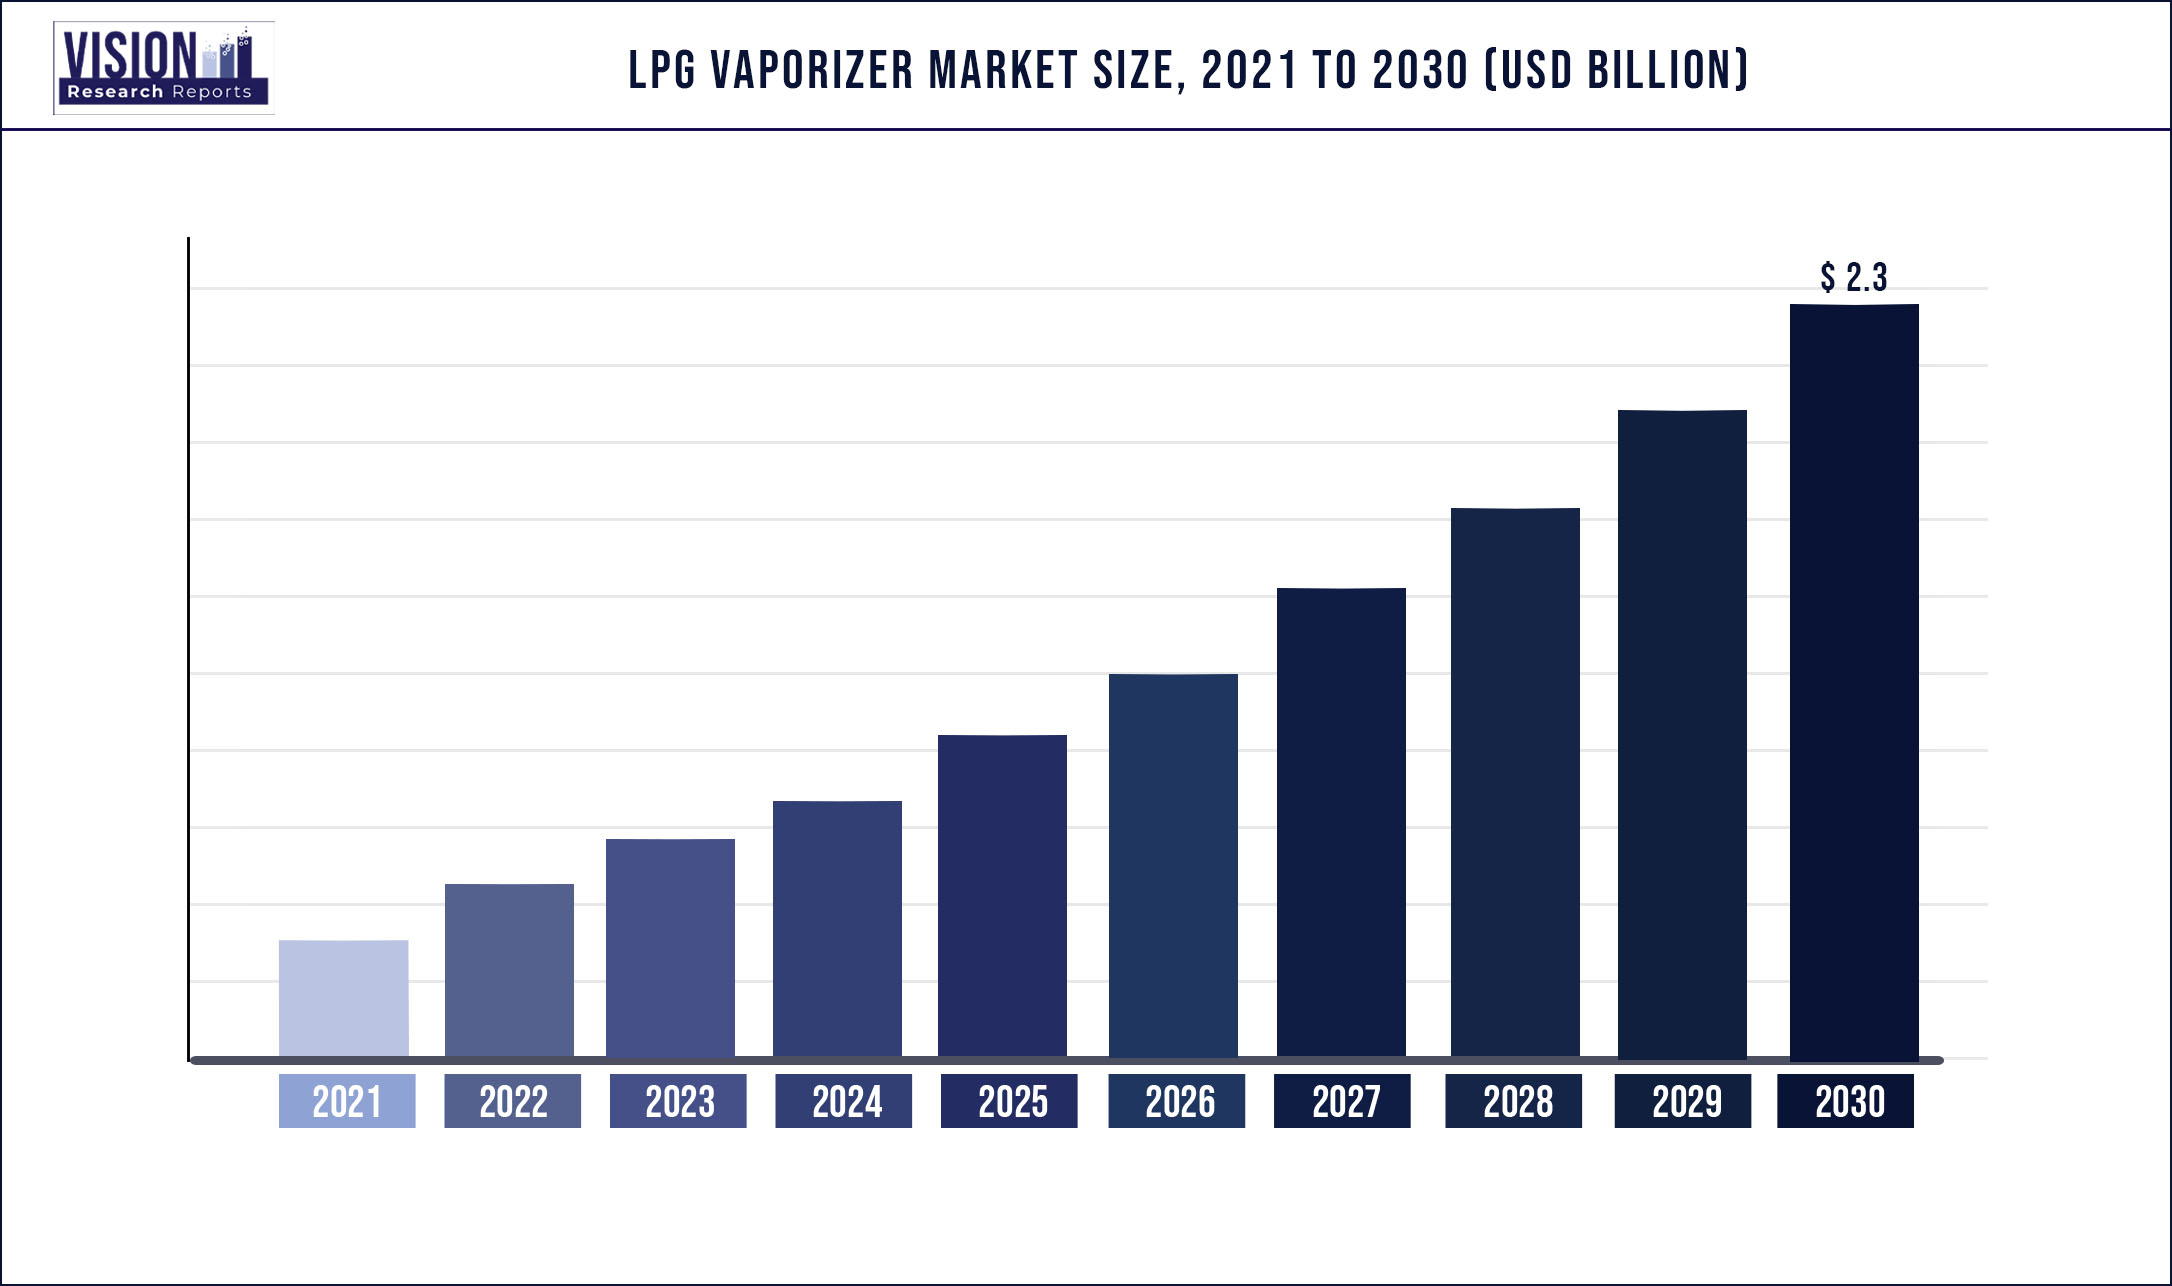 LPG Vaporizer Market Size 2021 to 2030